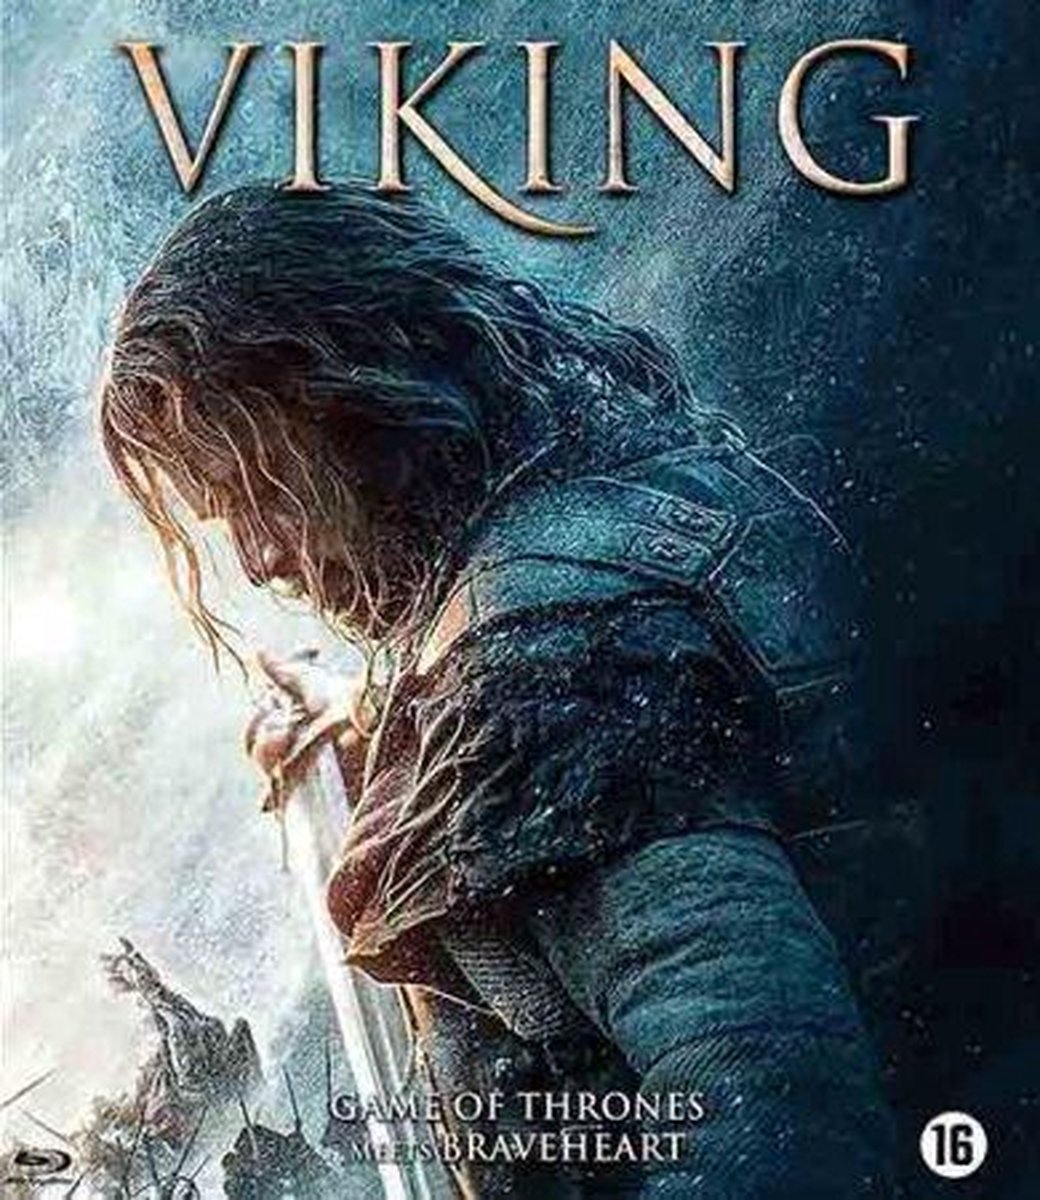 Viking (Blu-ray)